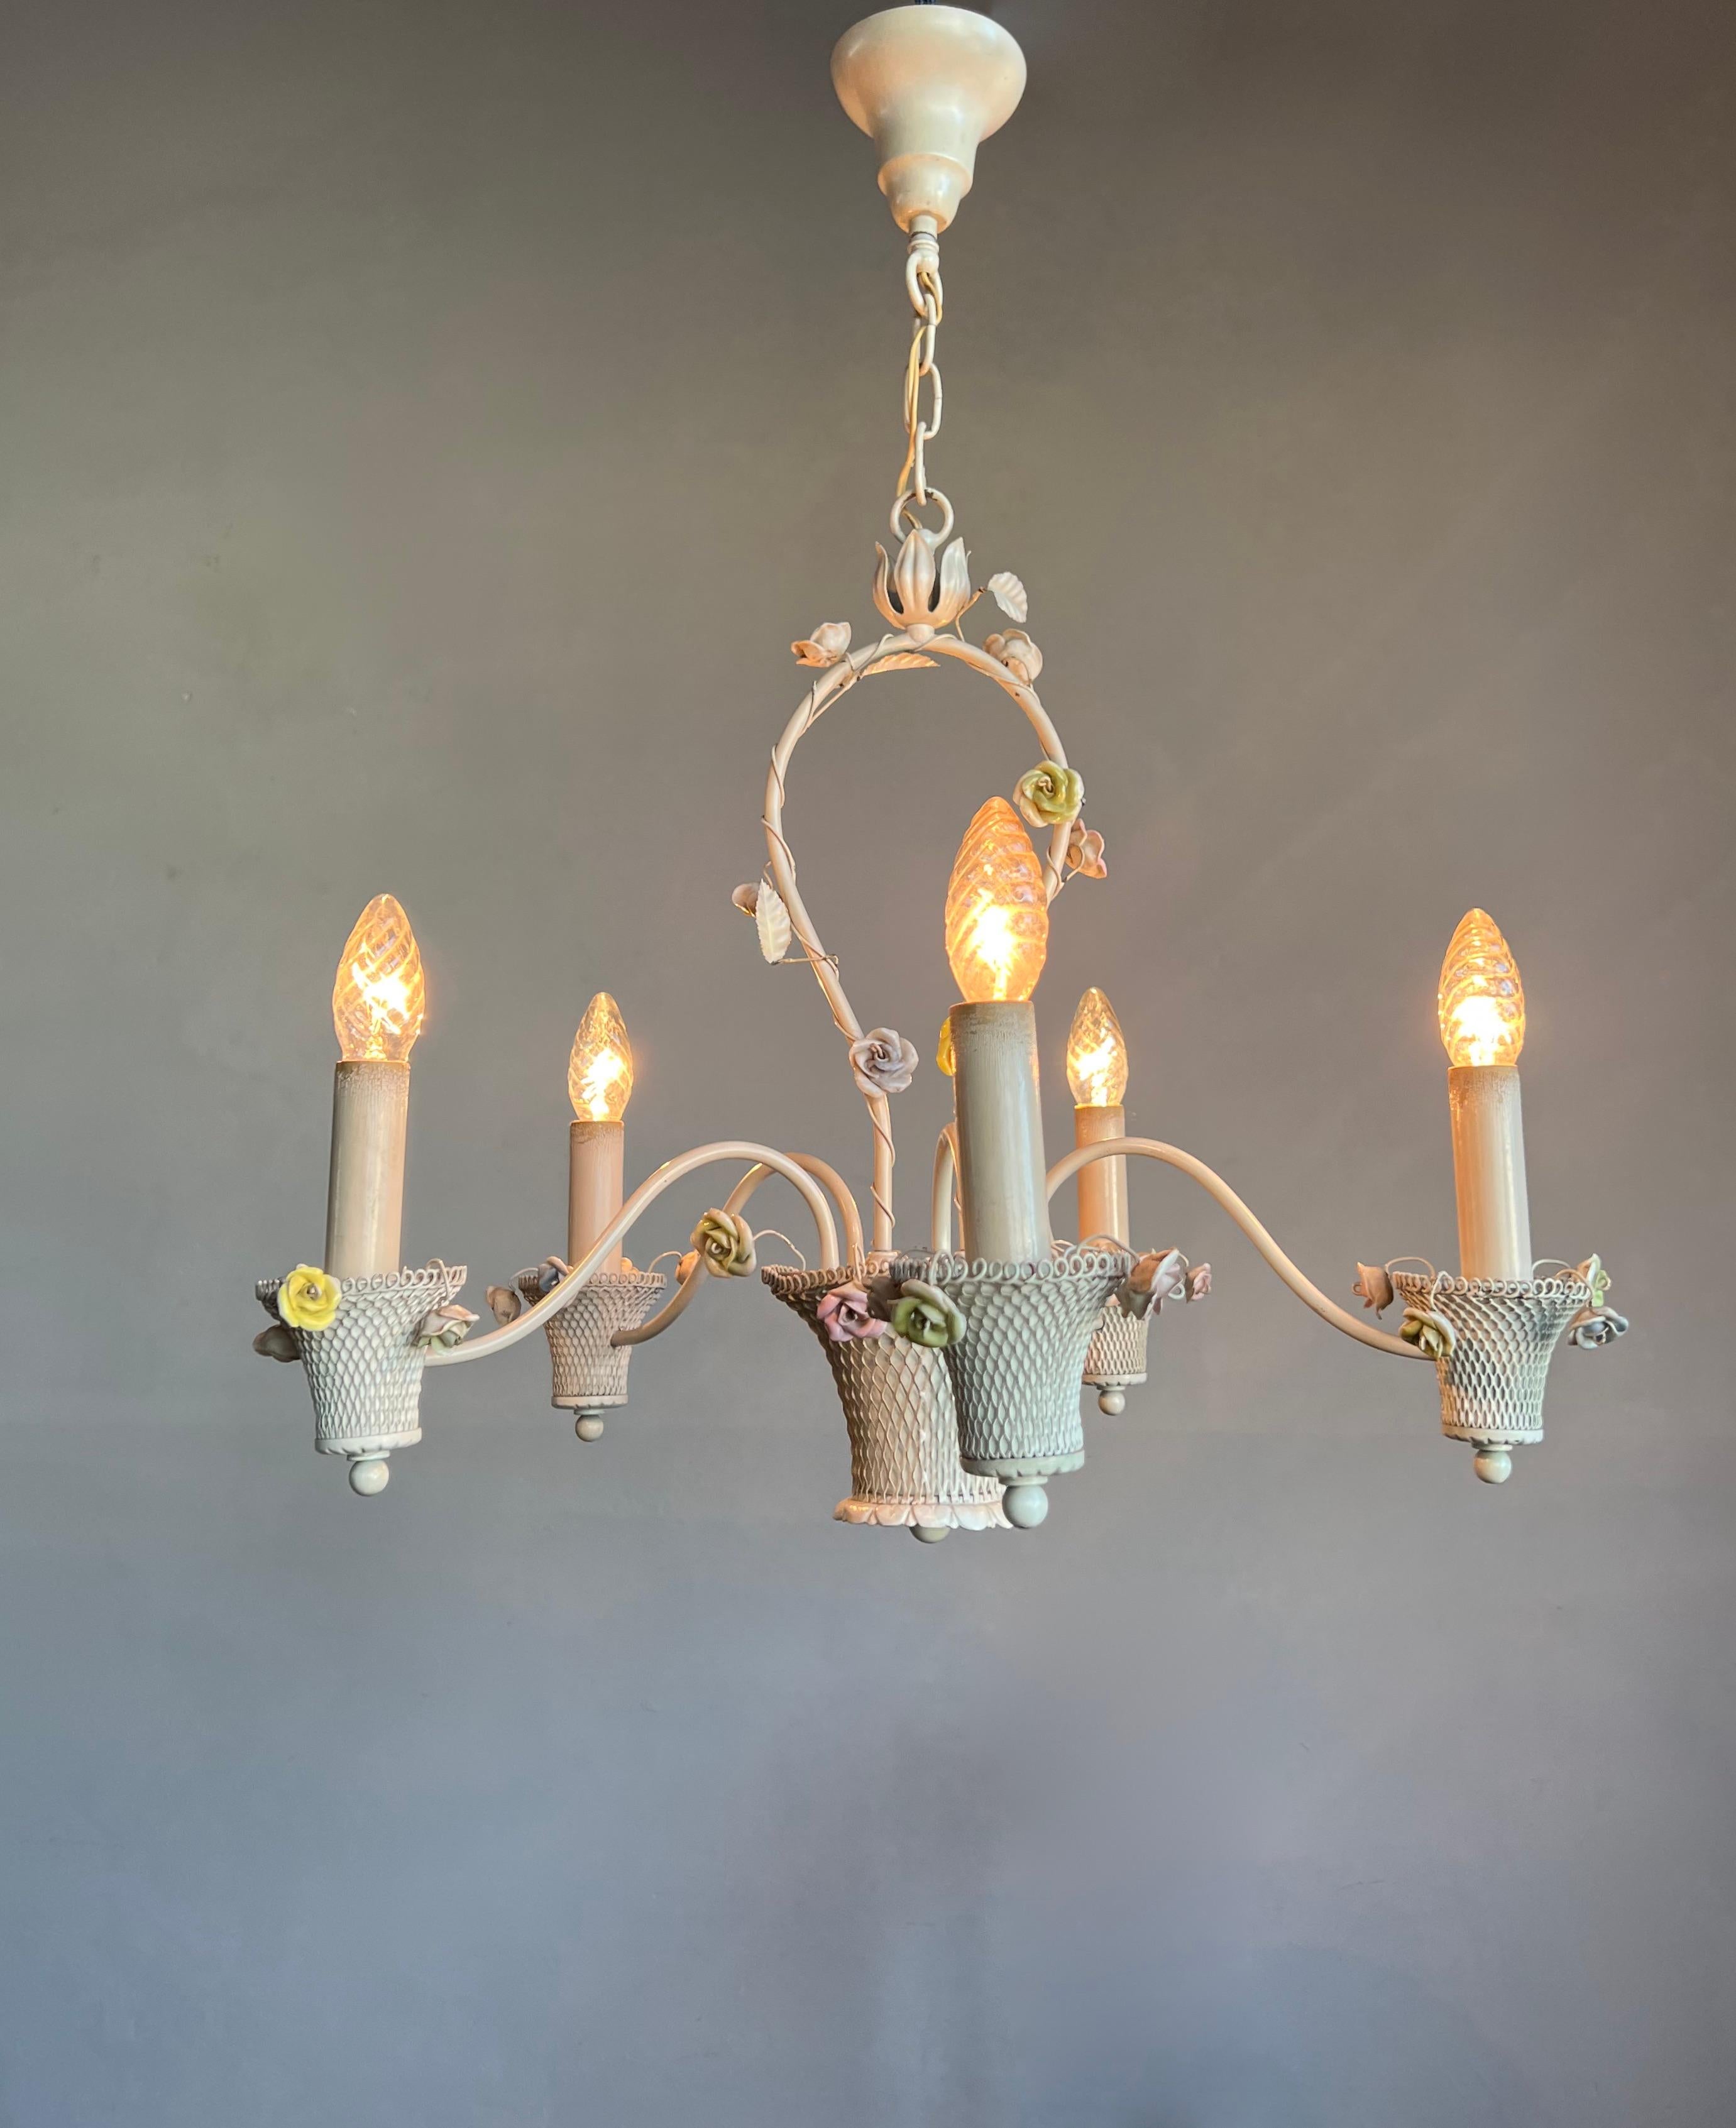 20th Century Pretty Italian Toleware Chandelier w Porcelain Flowers 5 Light Pendant / Fixture